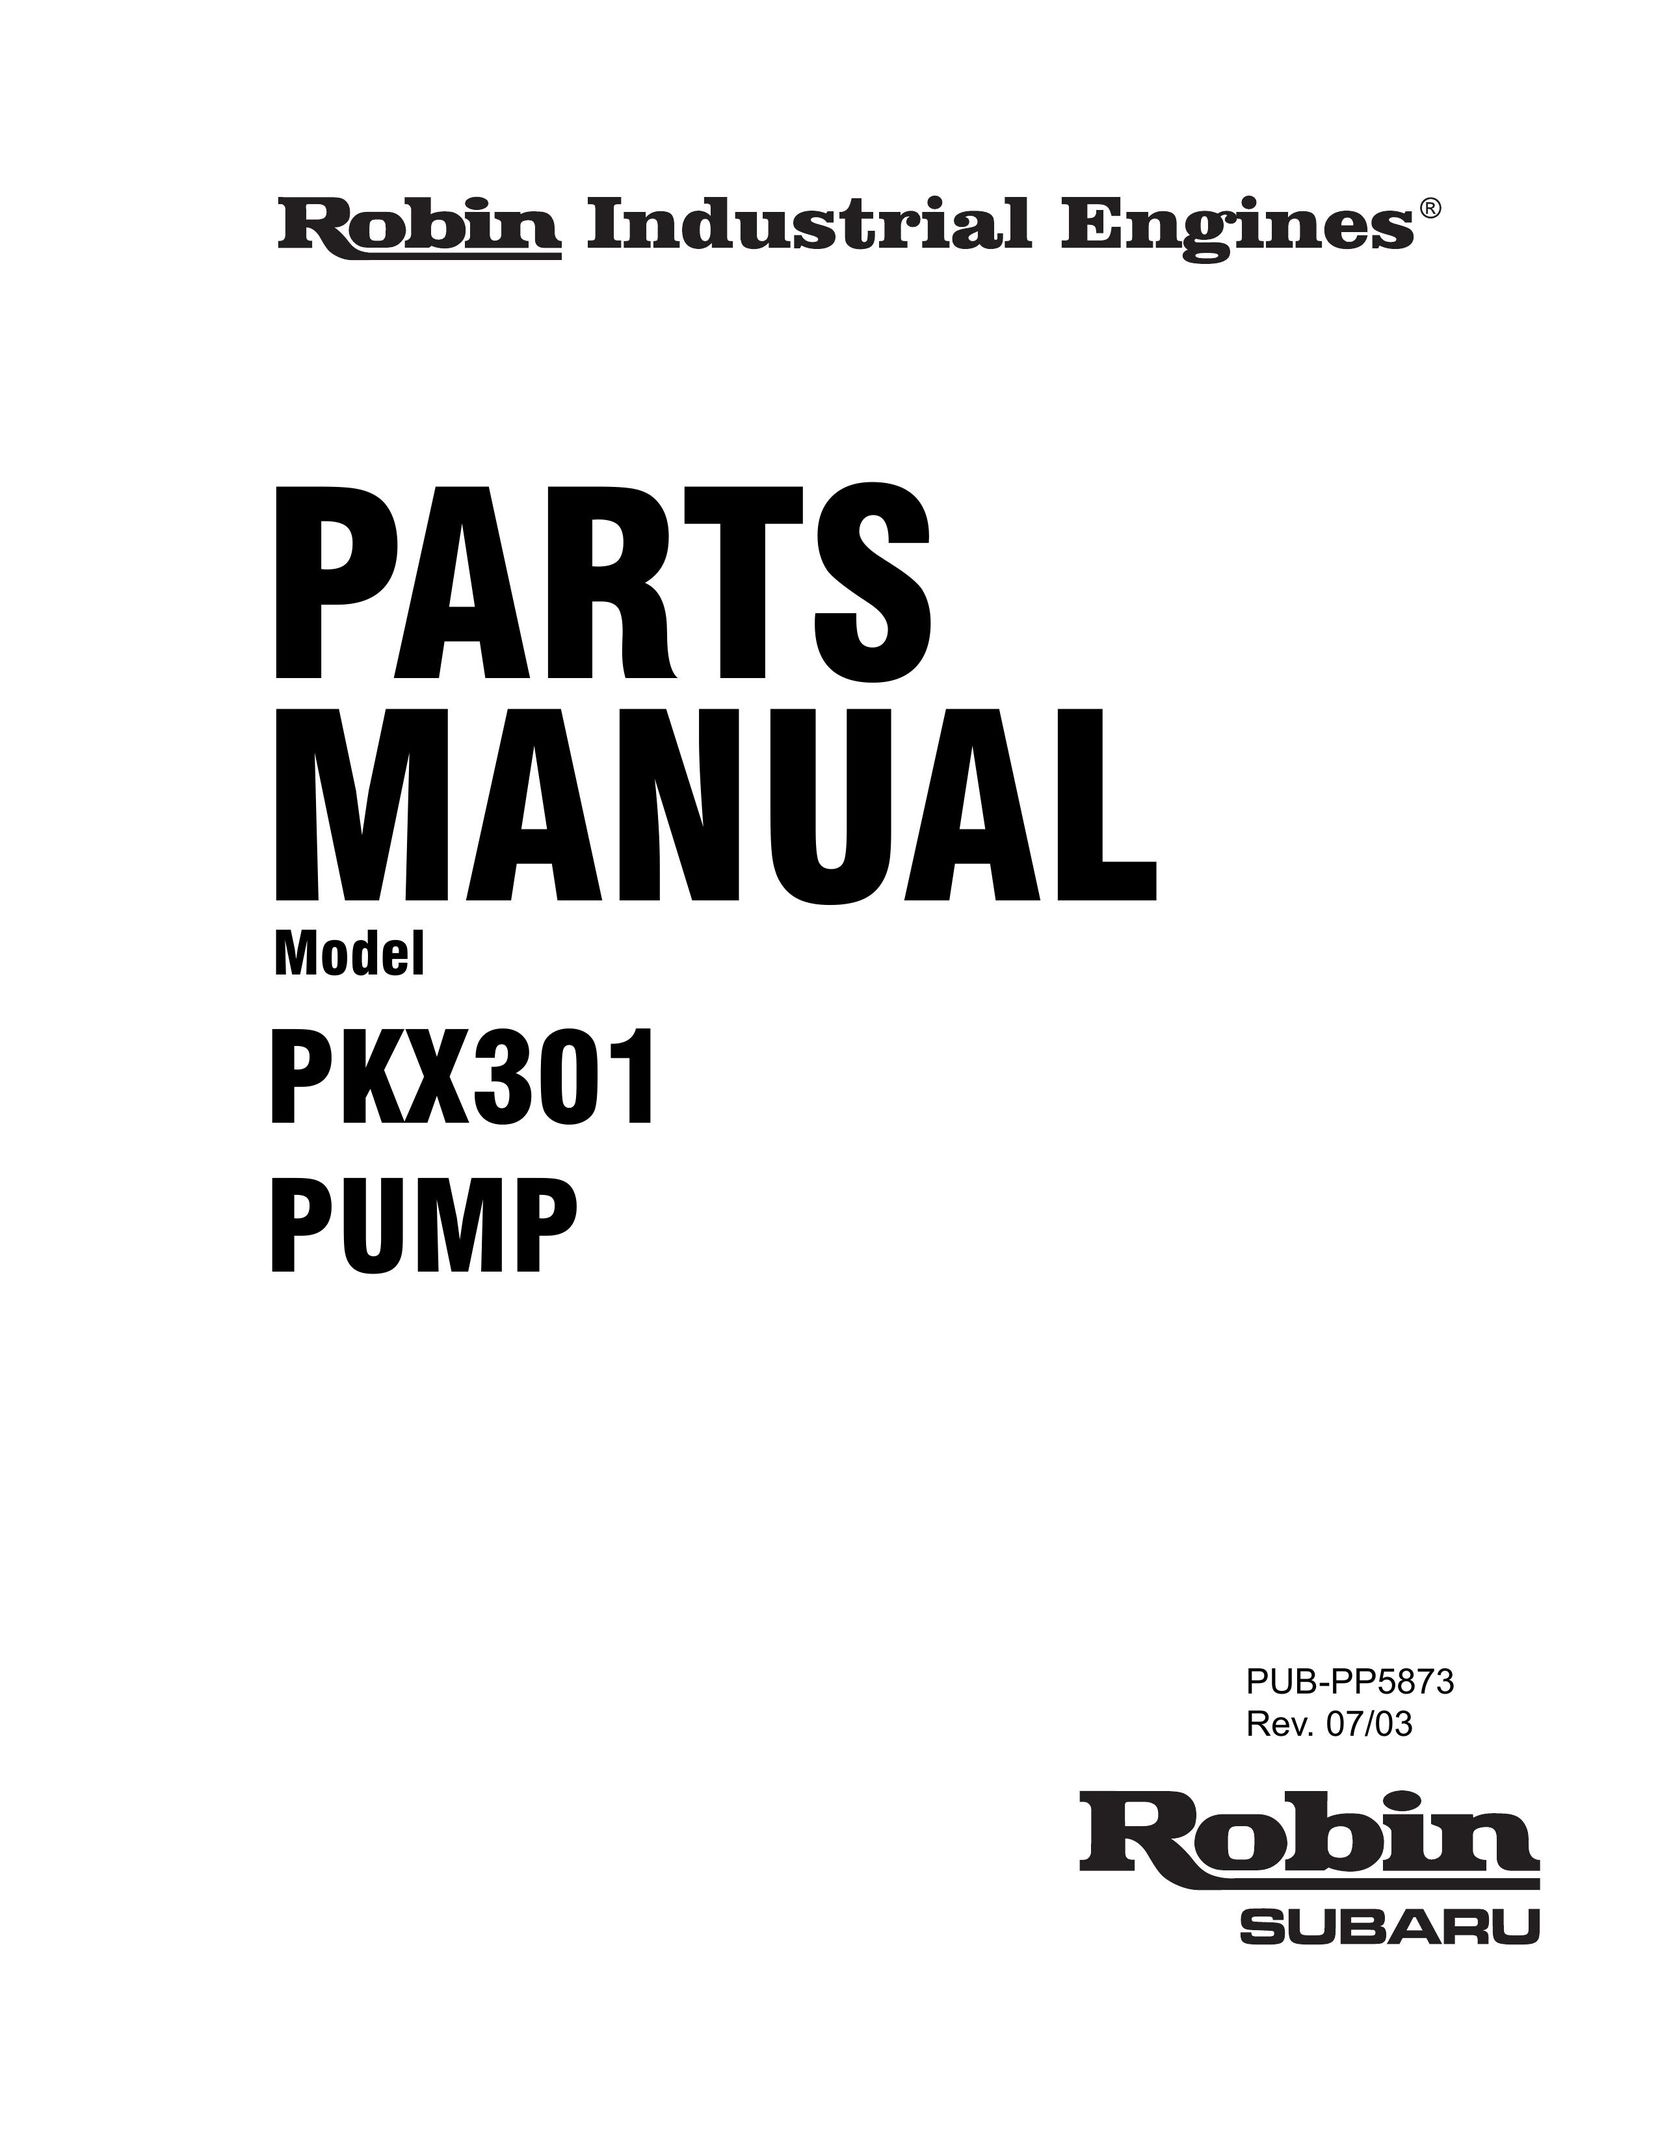 Subaru Robin Power Products PKX301 Water Pump User Manual